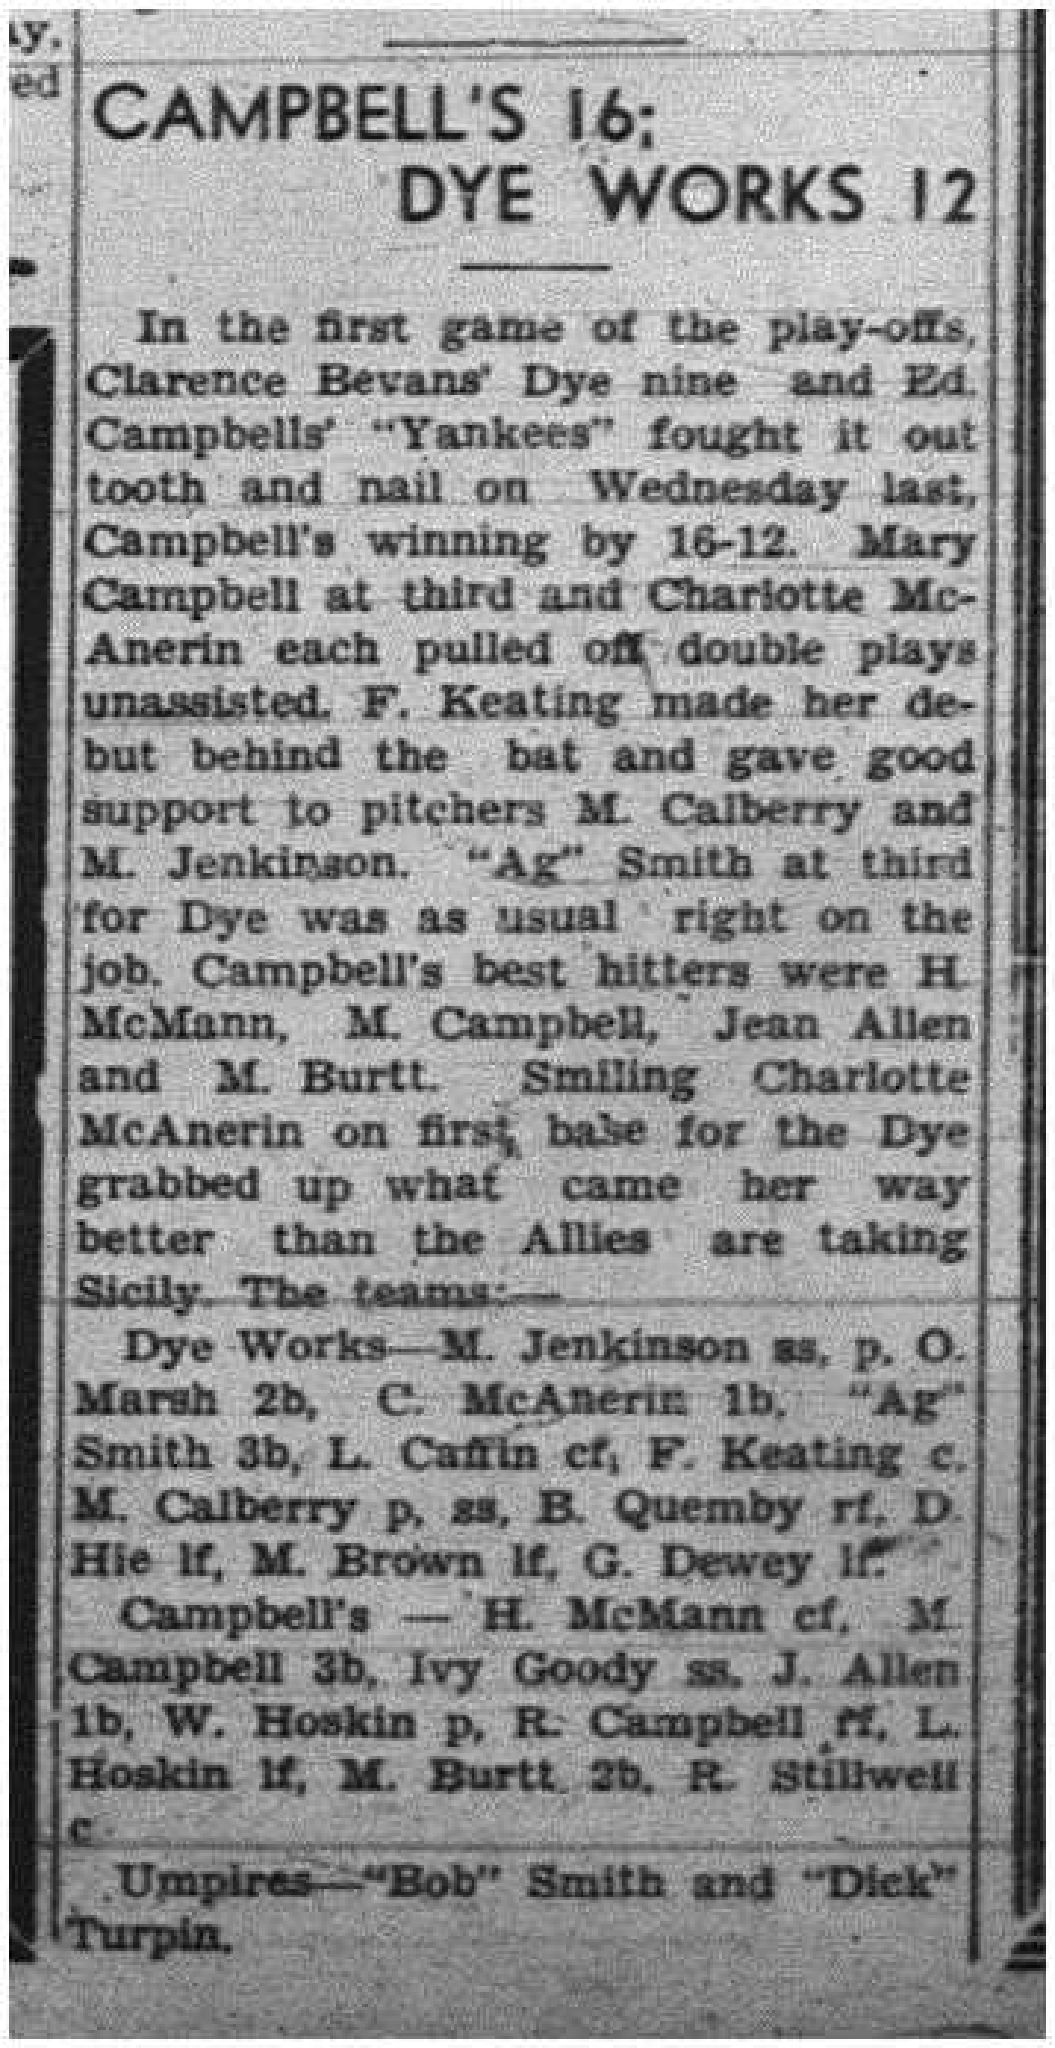 1943-08-19 Softball - Girls Campbells vs Dye Works